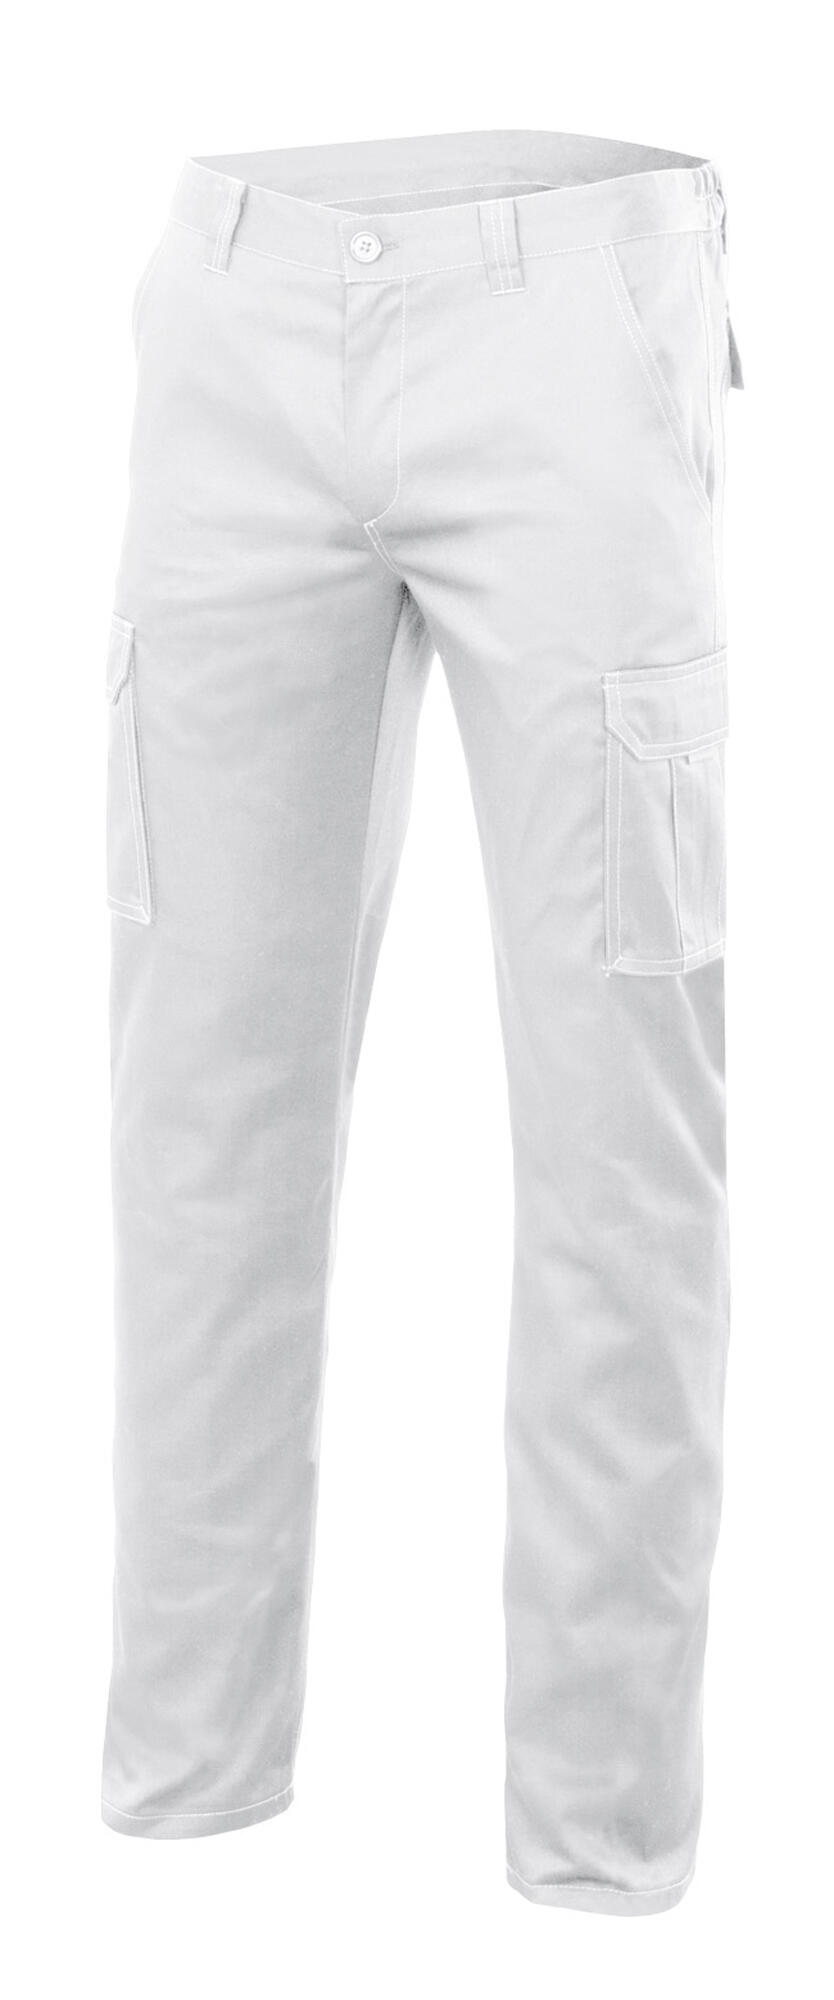 Pantalon de trabajo multibolsillo stretch blanco t52